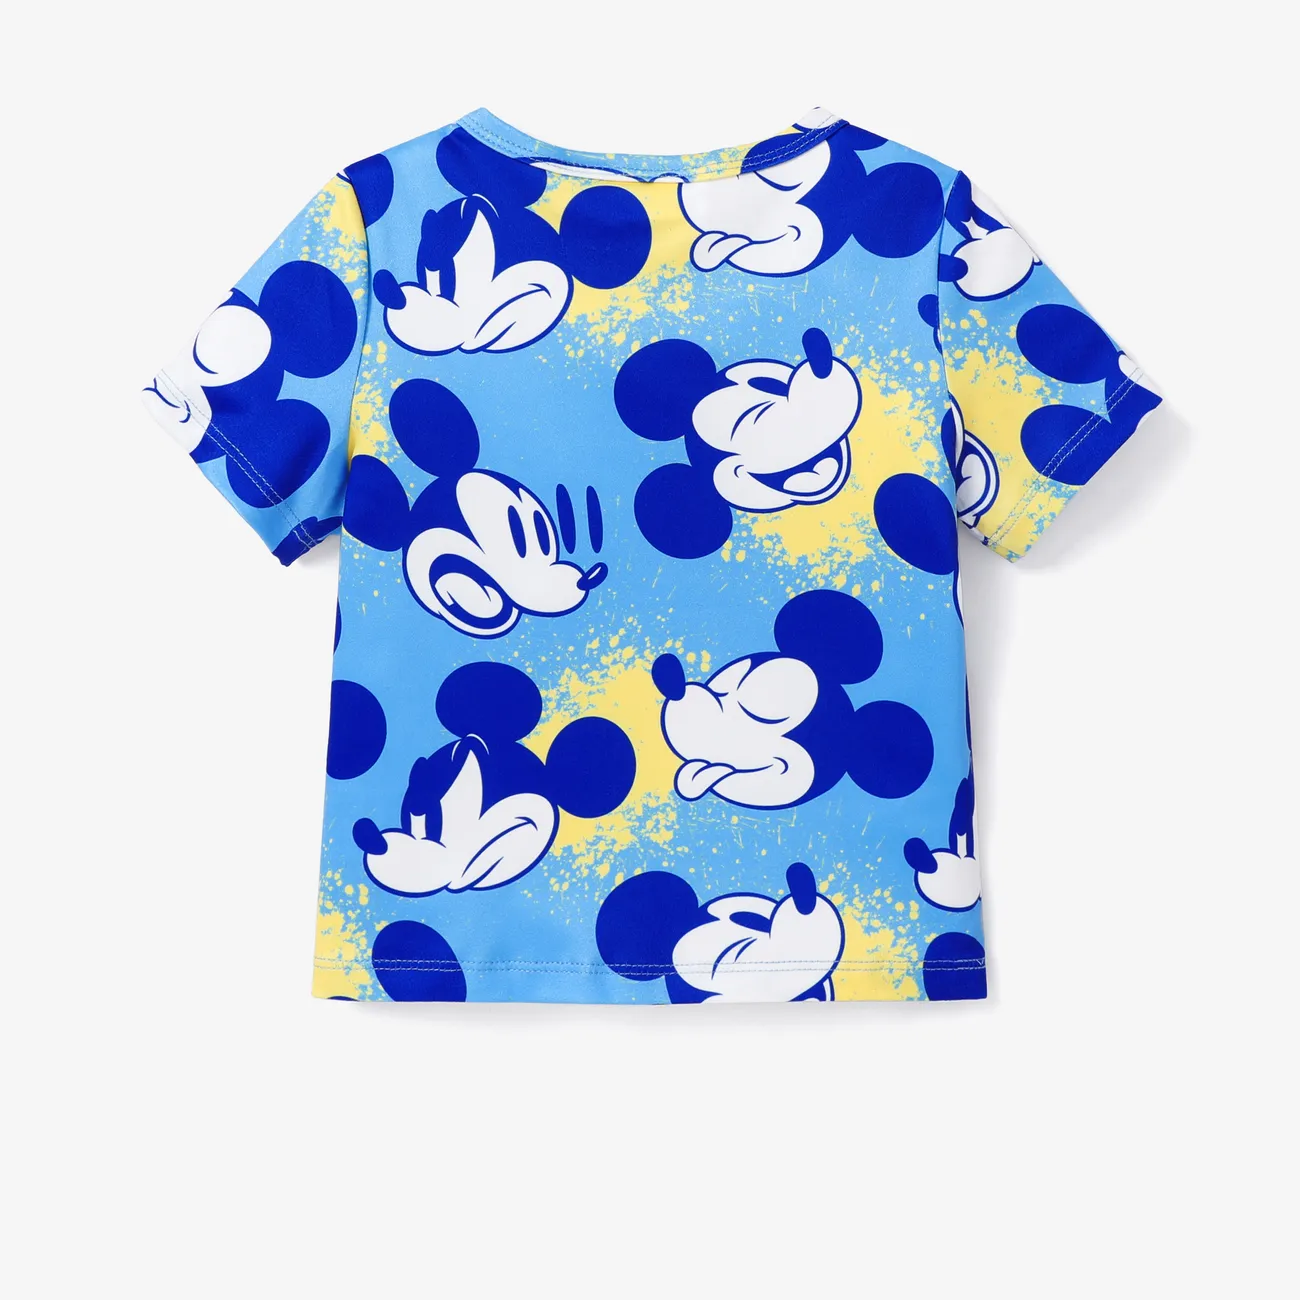 Disney Mickey et ses amis enfant en bas âge fille/enfant en bas âge garçon Tye-dyed Tee ou short en jean imprimé Bleu big image 1